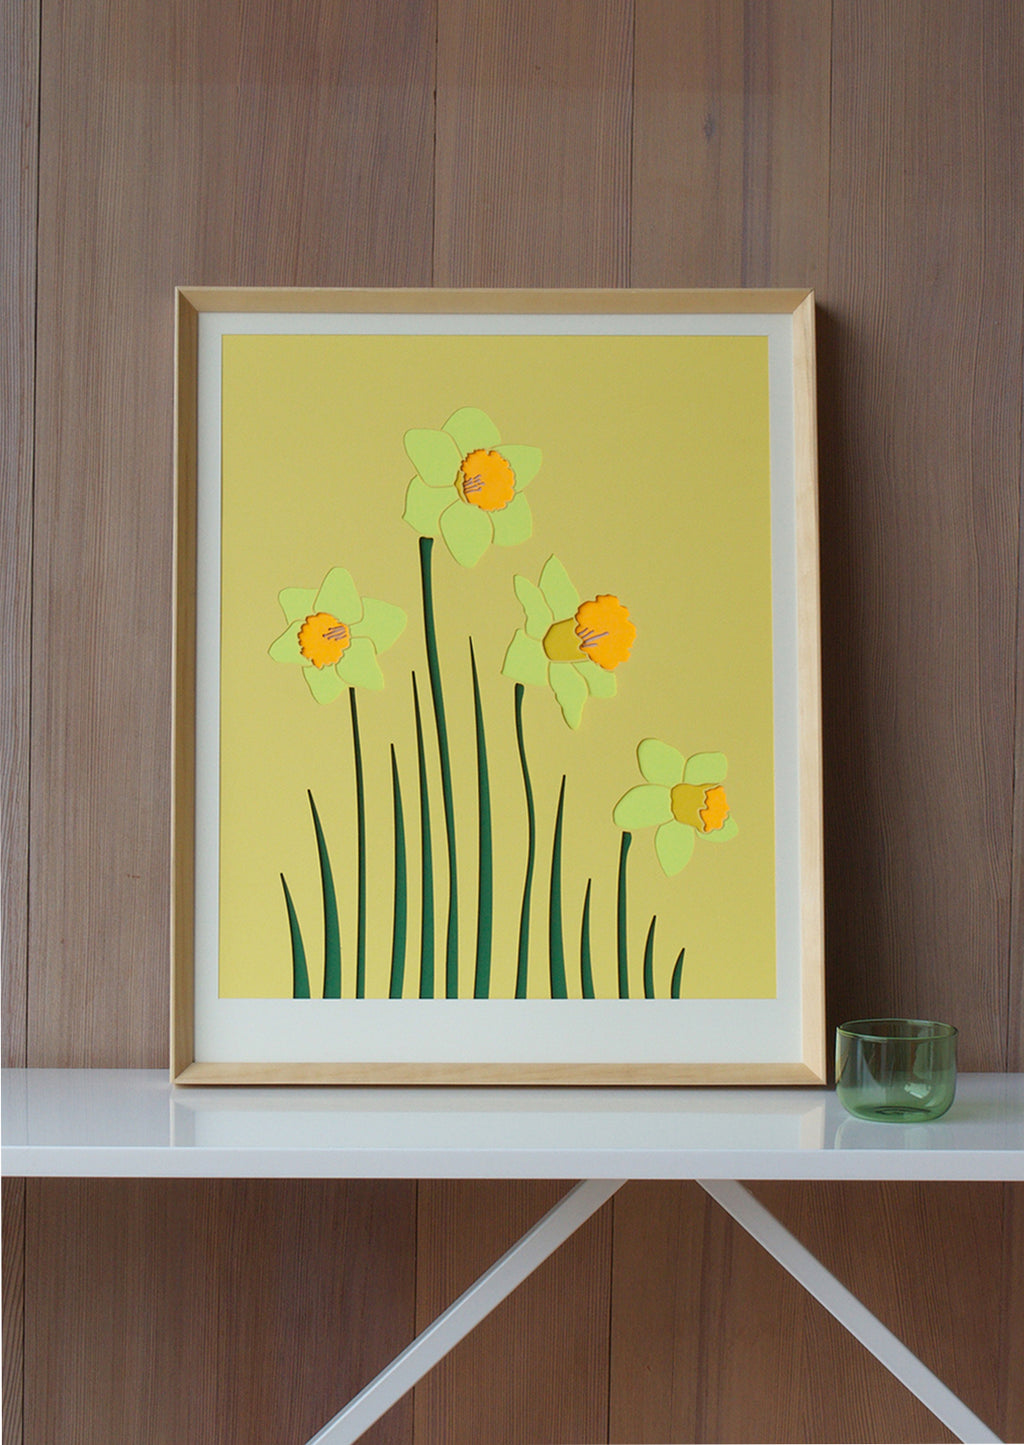 2: A lasercut artwork depicting daffodils on yellow background.